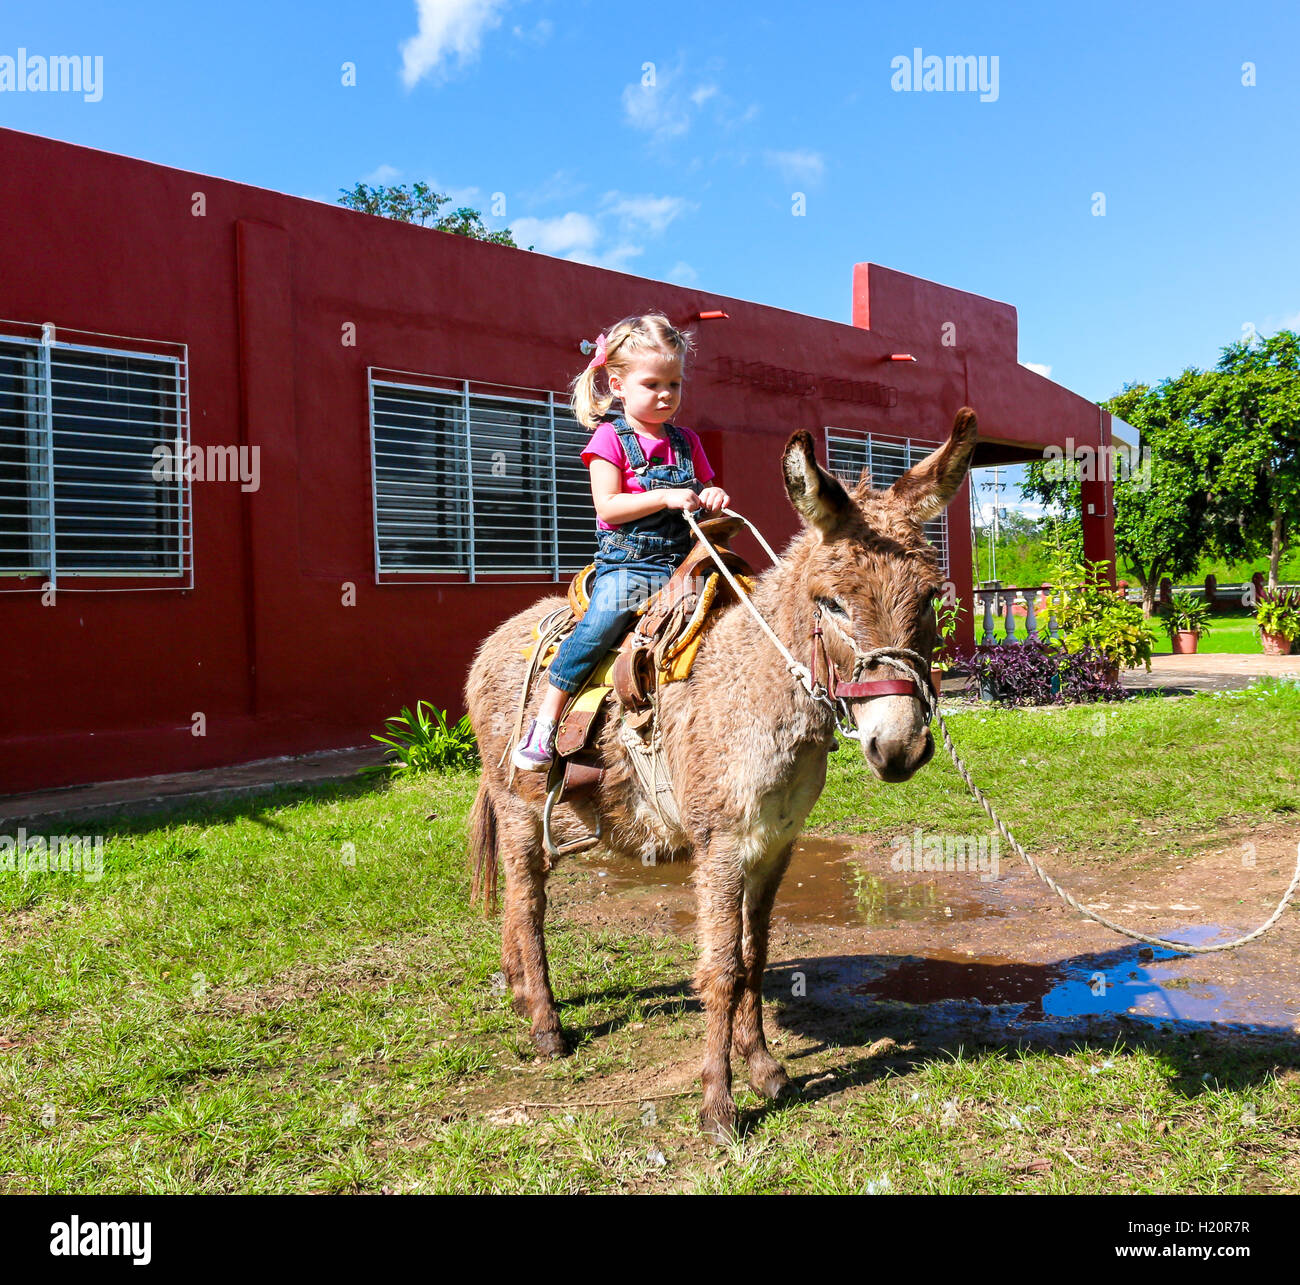 child riding a miniature donkey Stock Photo